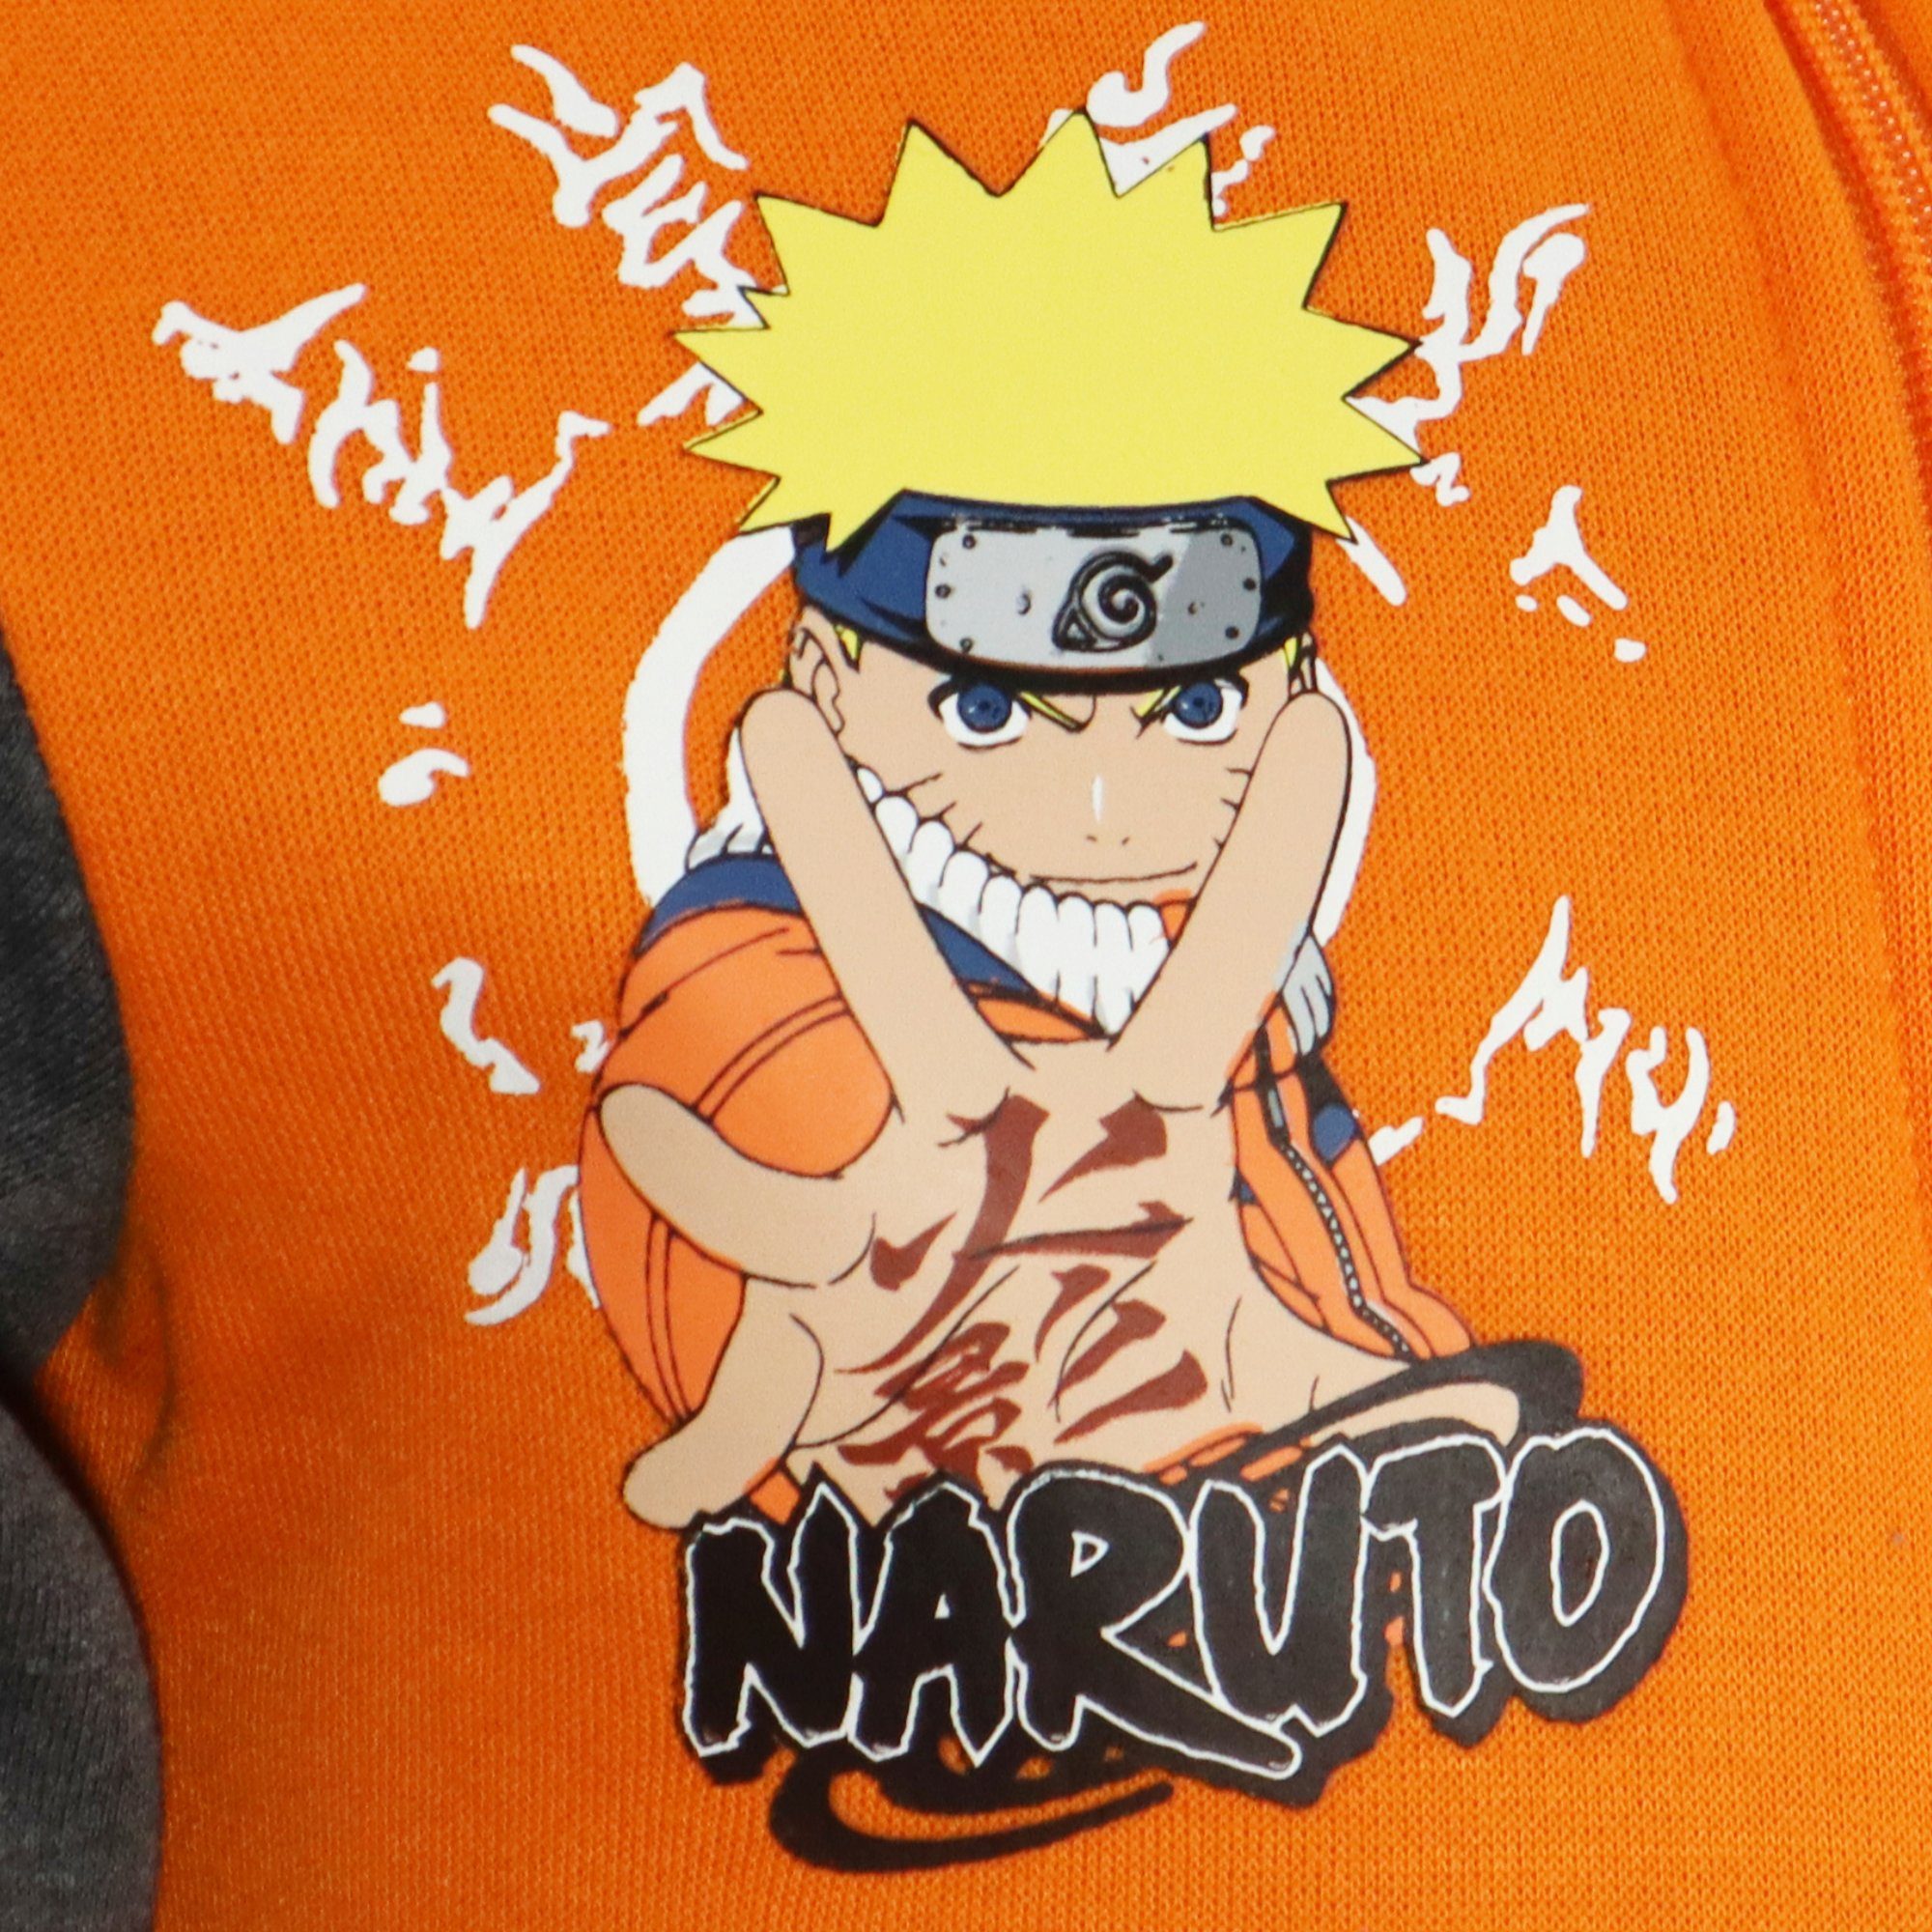 Hose Sweater Orange 140 bis Gr. Jacke, Jogginganzug Sporthose Joggingset 98 Shippuden Naruto Naruto